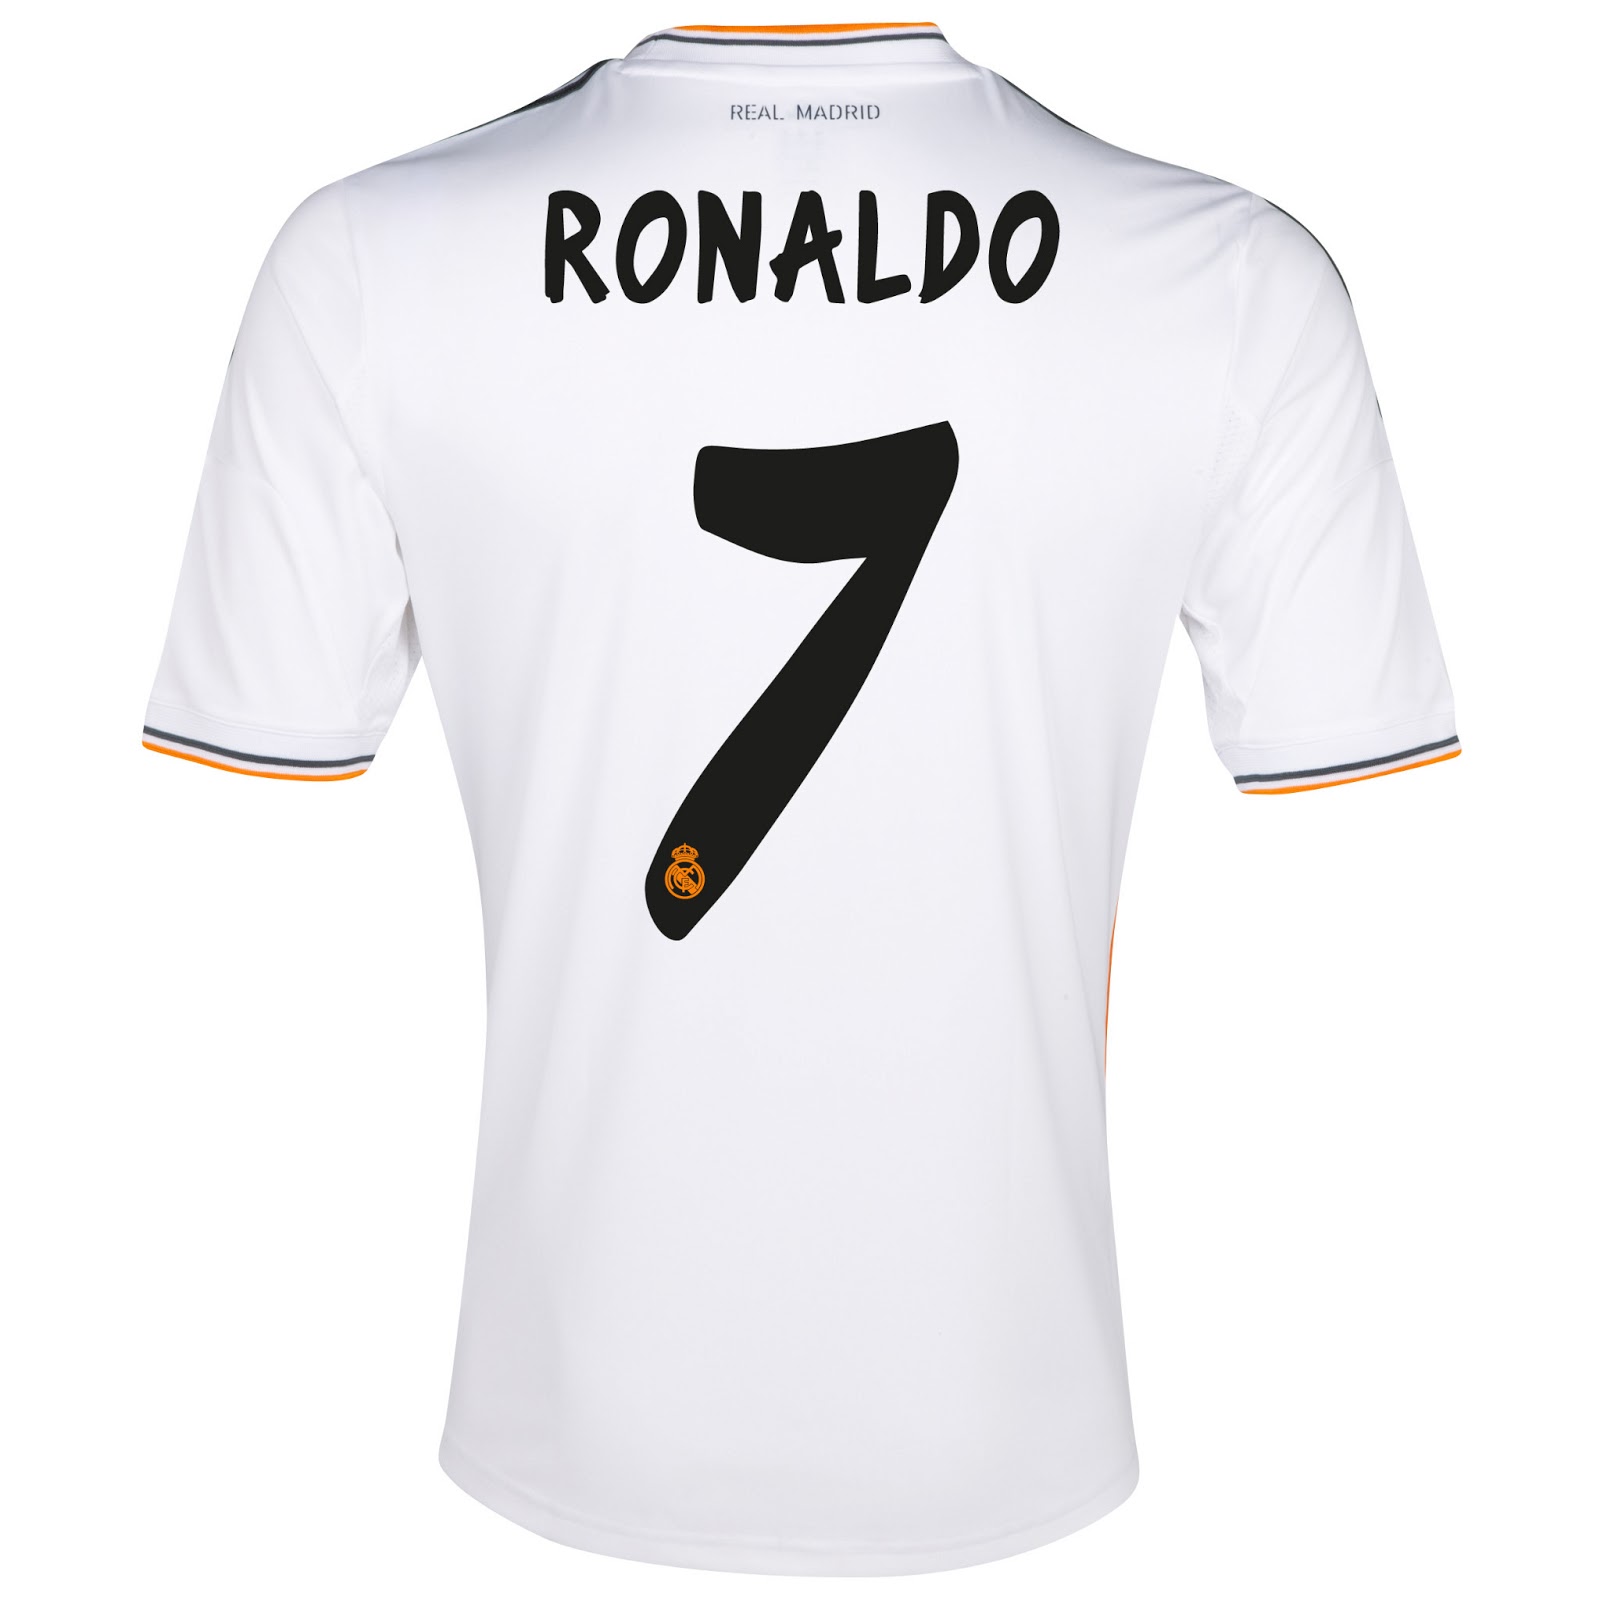 Real+Madrid+13+14+Home+Kit+Ronaldo.jpg